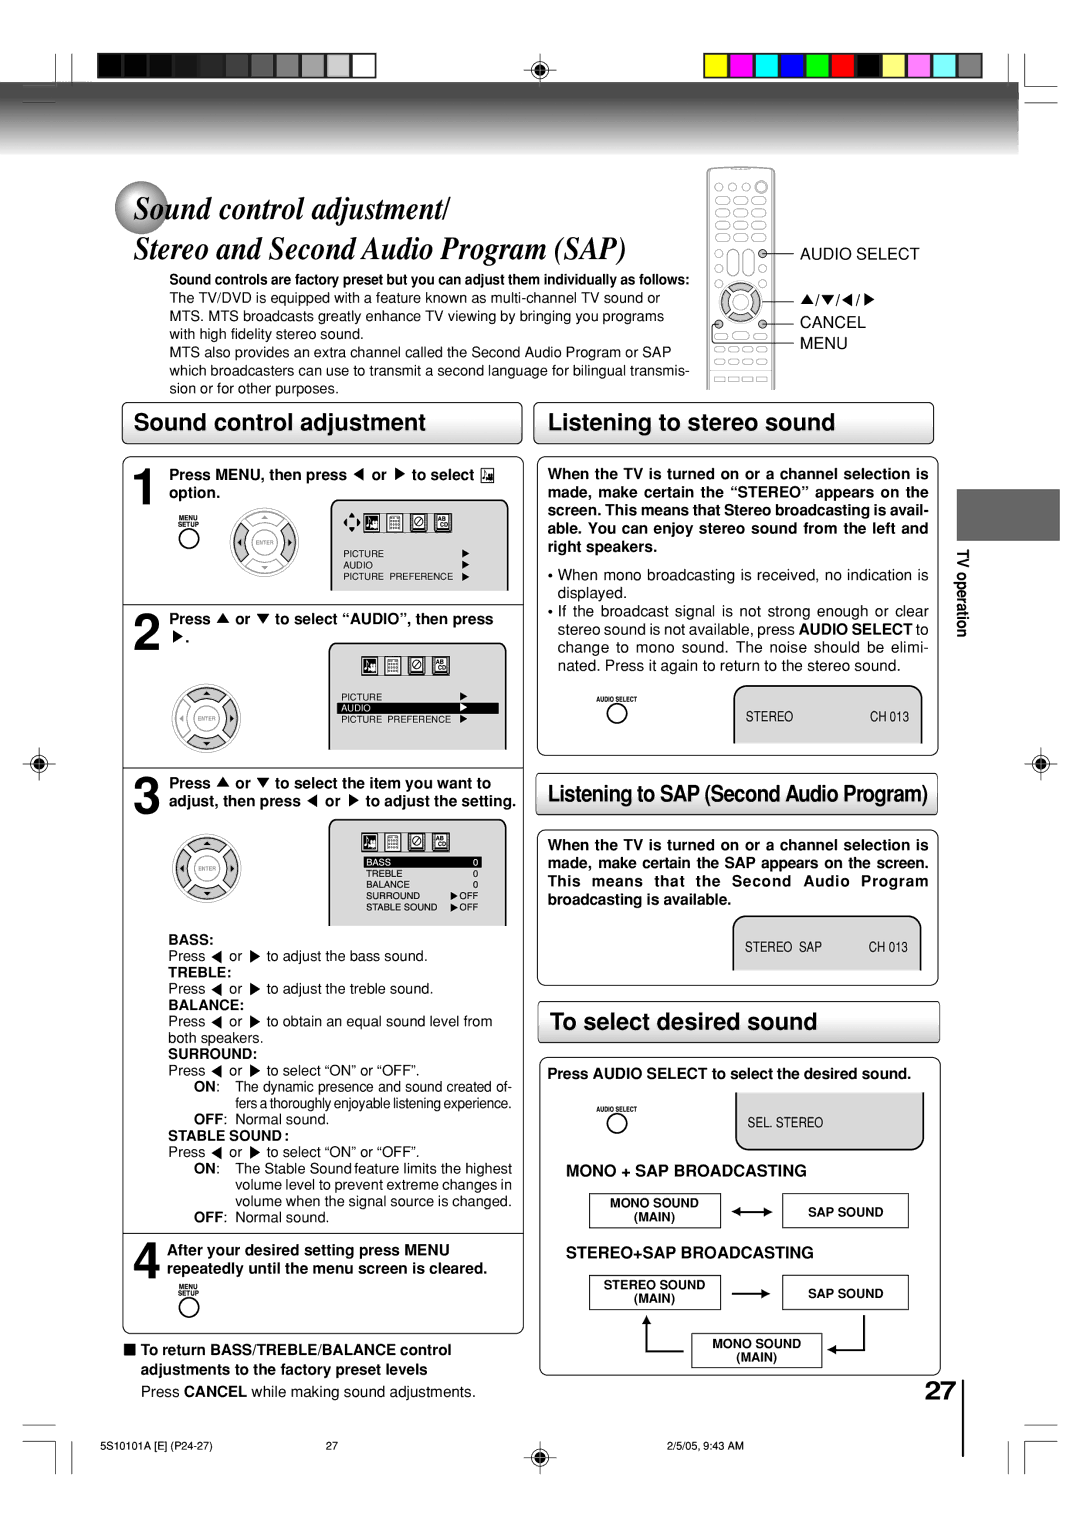 Toshiba MD20F51, MD24F51 Sound control adjustment, Listening to stereo sound, Listening to SAP Second Audio Program 